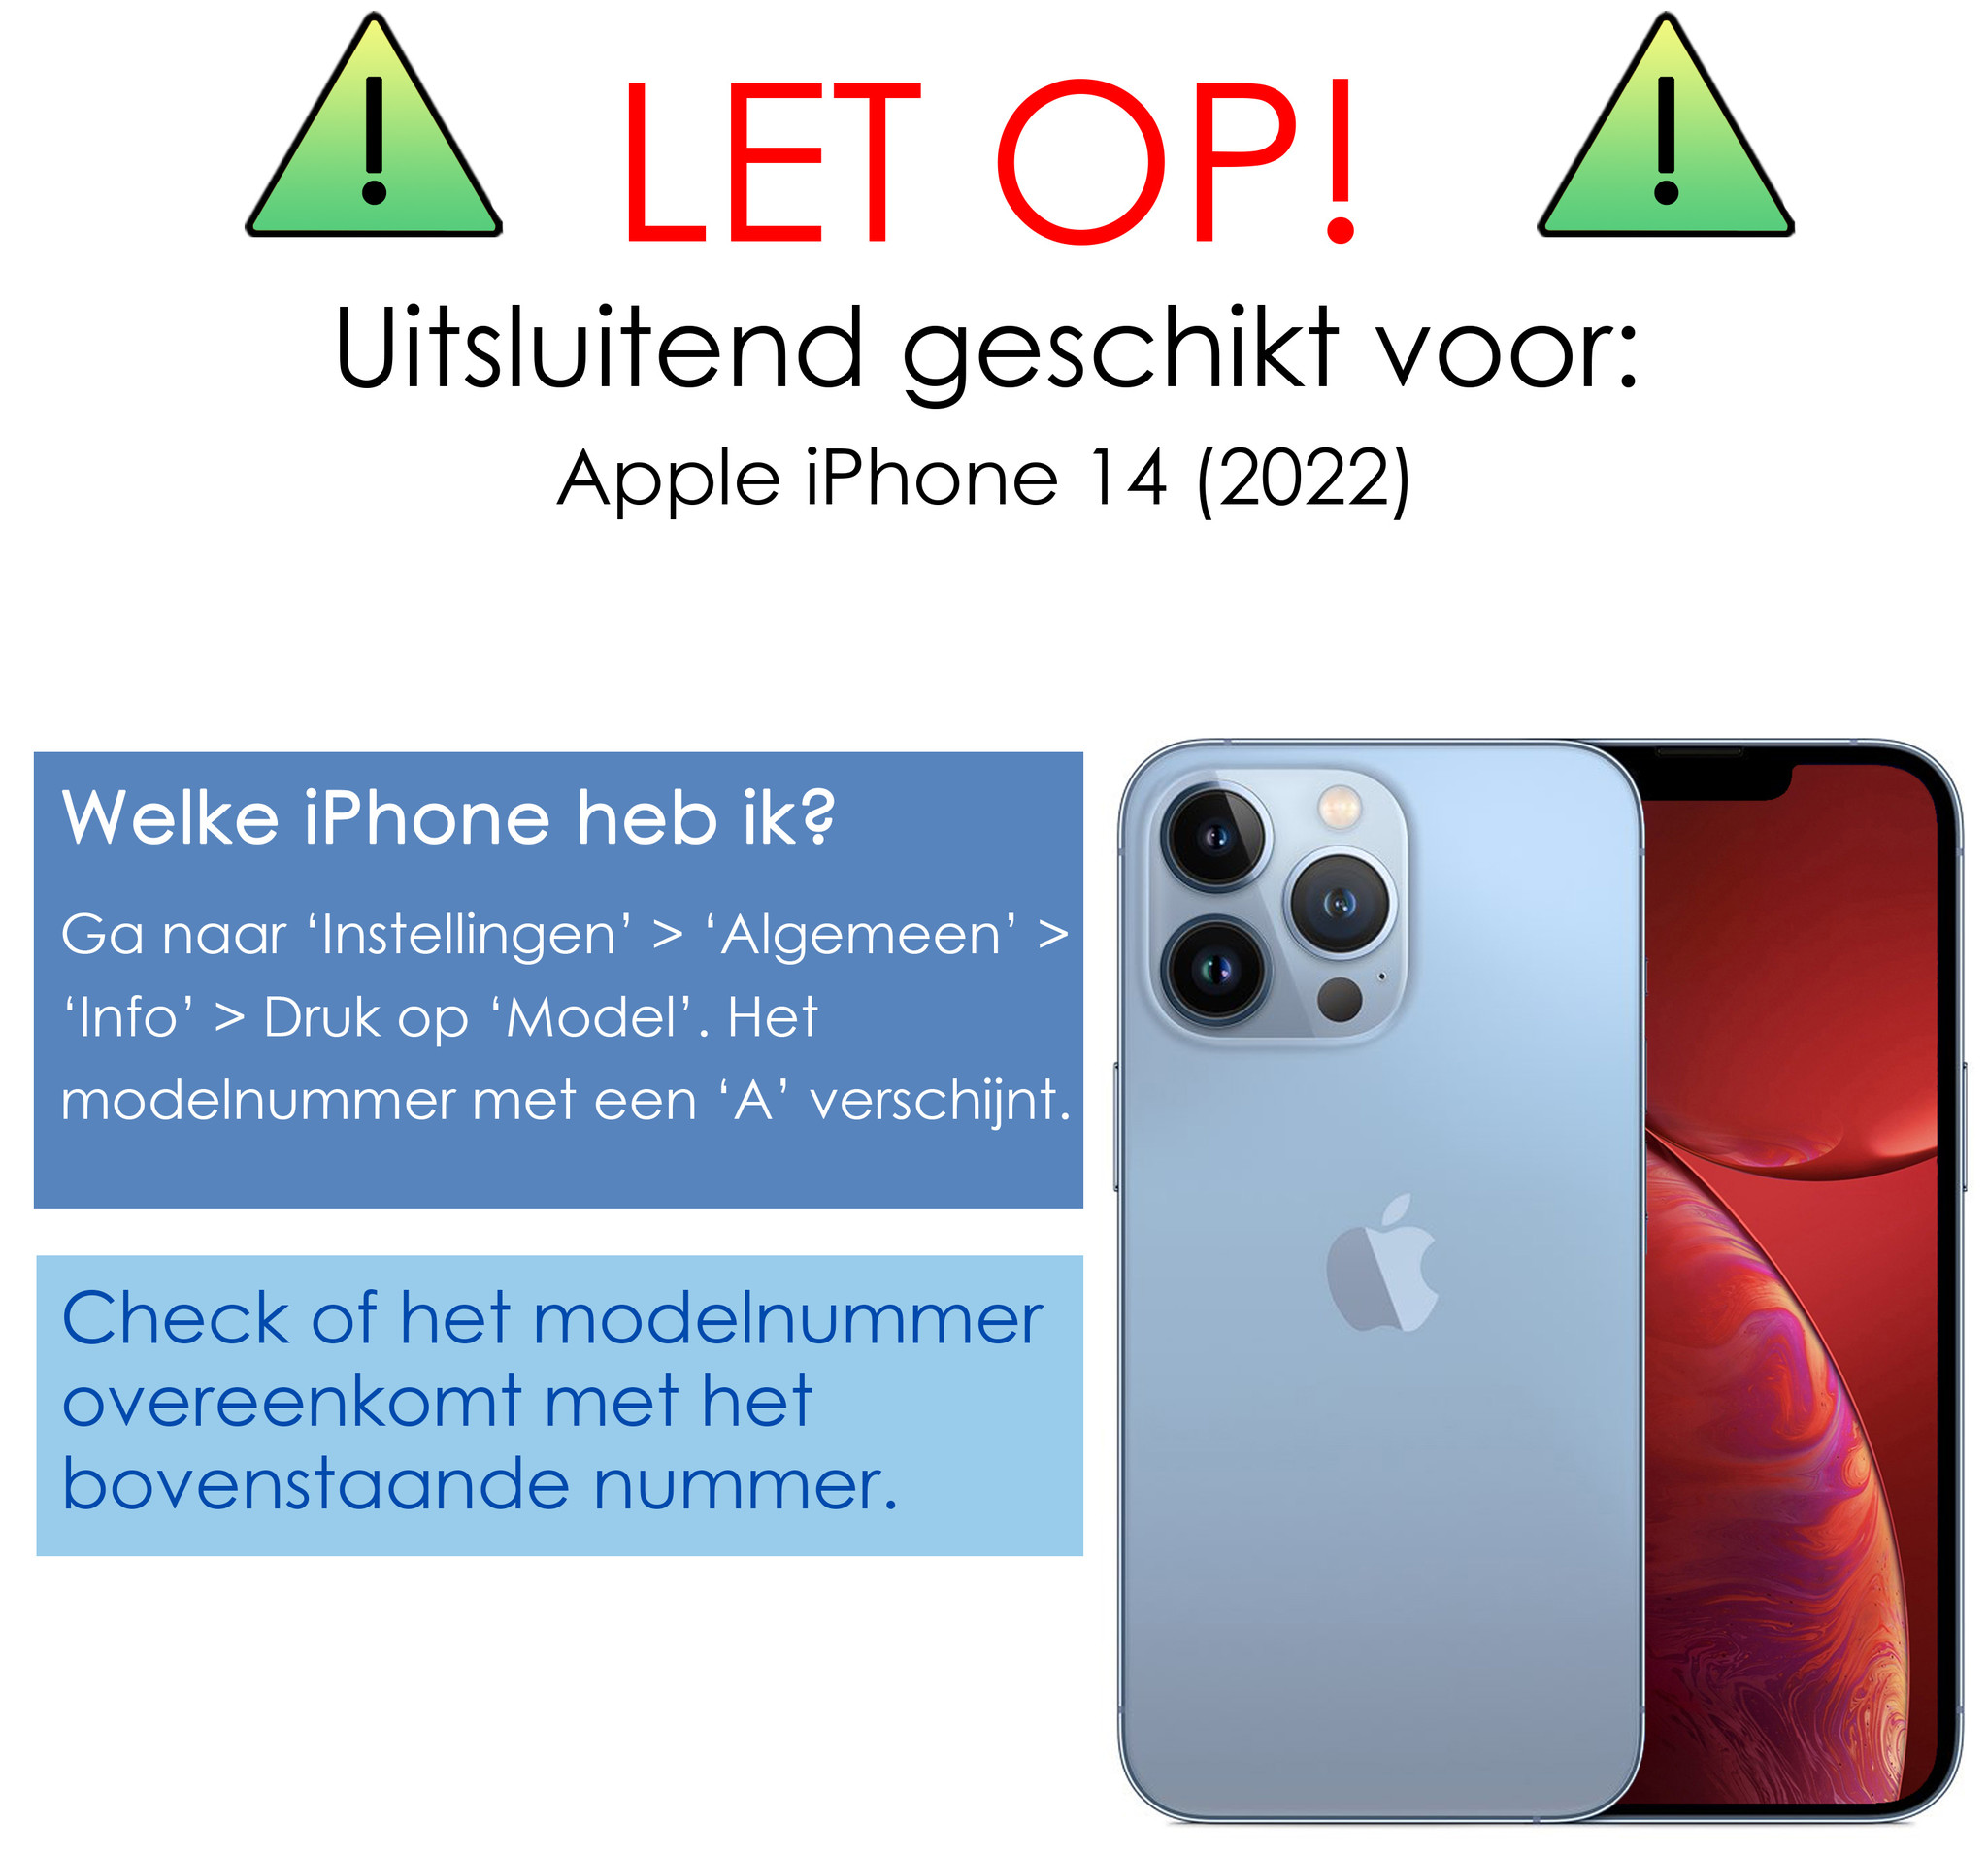 NoXx Hoes voor iPhone 14 Hoesje Back Cover Siliconen Case Hoes - Grijs - 2x